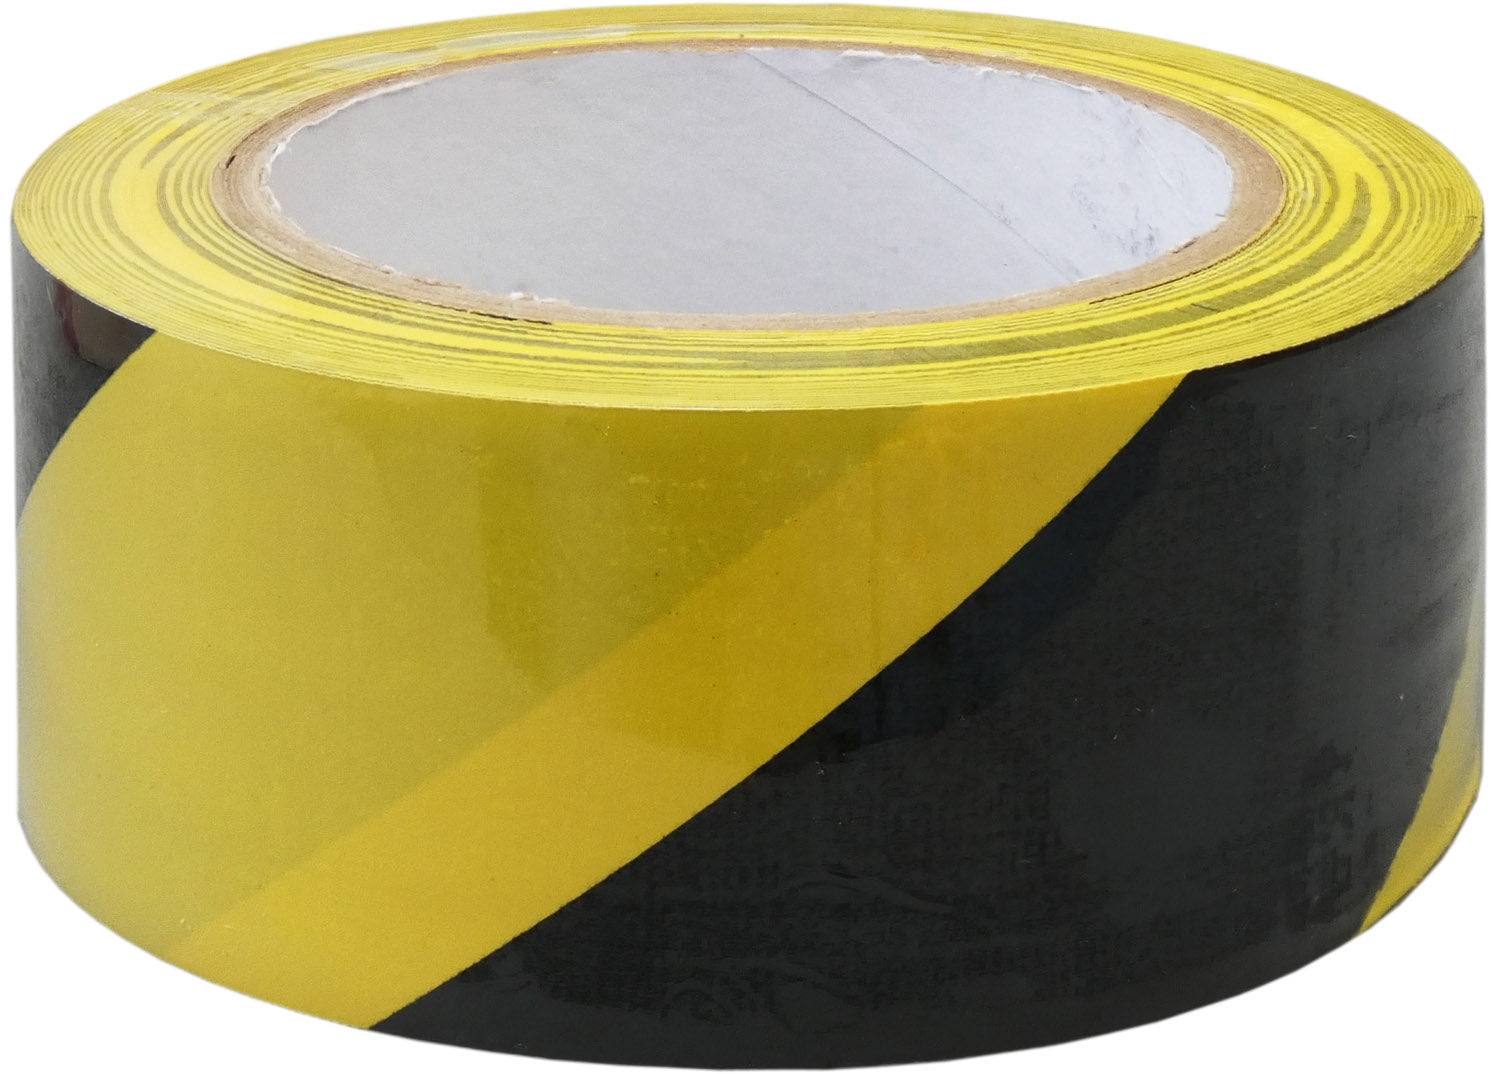 Adhesive Hazard Warning Tape - Yellow & Black - spo-cs-disabled - spo-default - spo-disabled - spo-notify-me-disabled